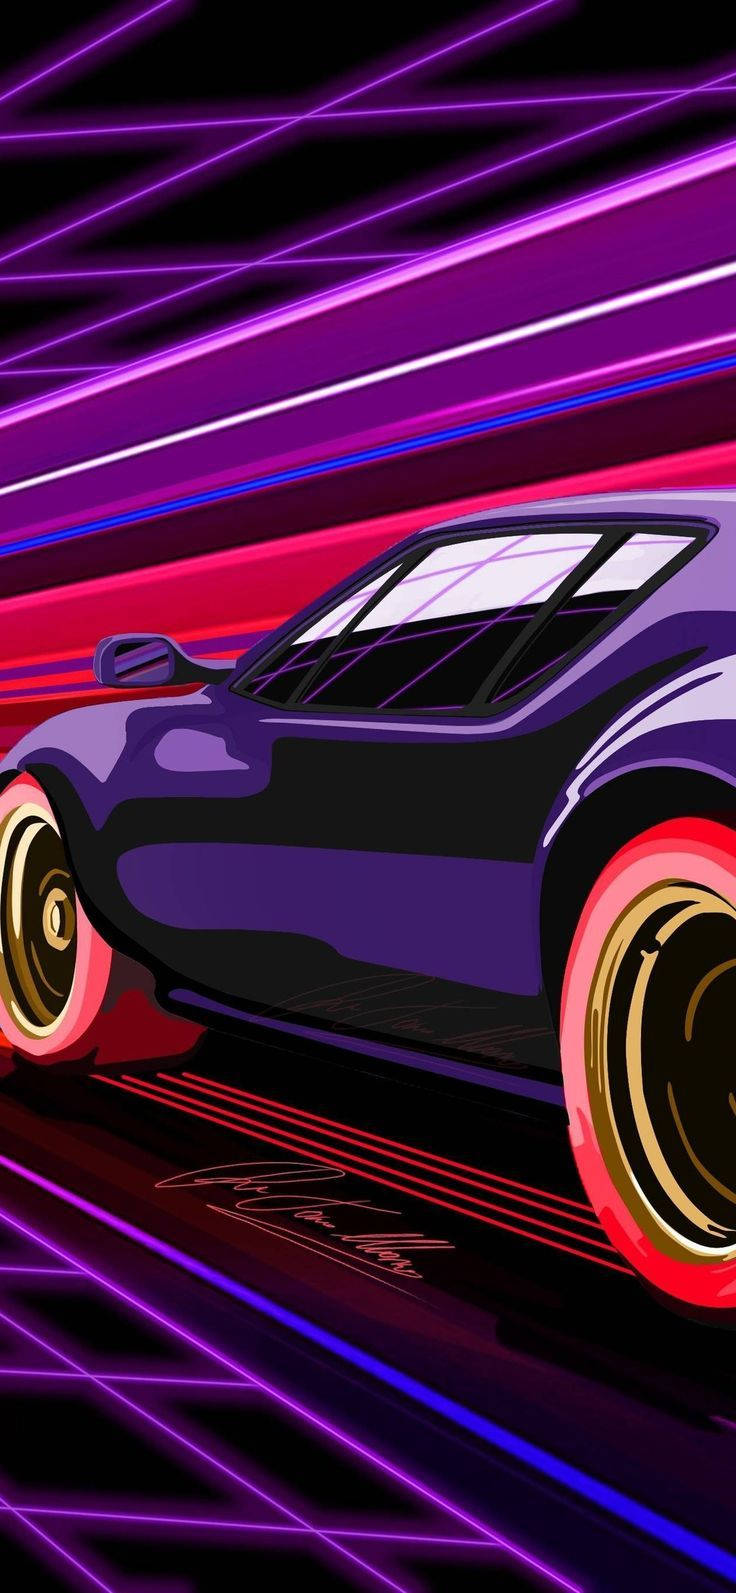 Illustration Of Futuristic Violet Car Iphone Wallpaper